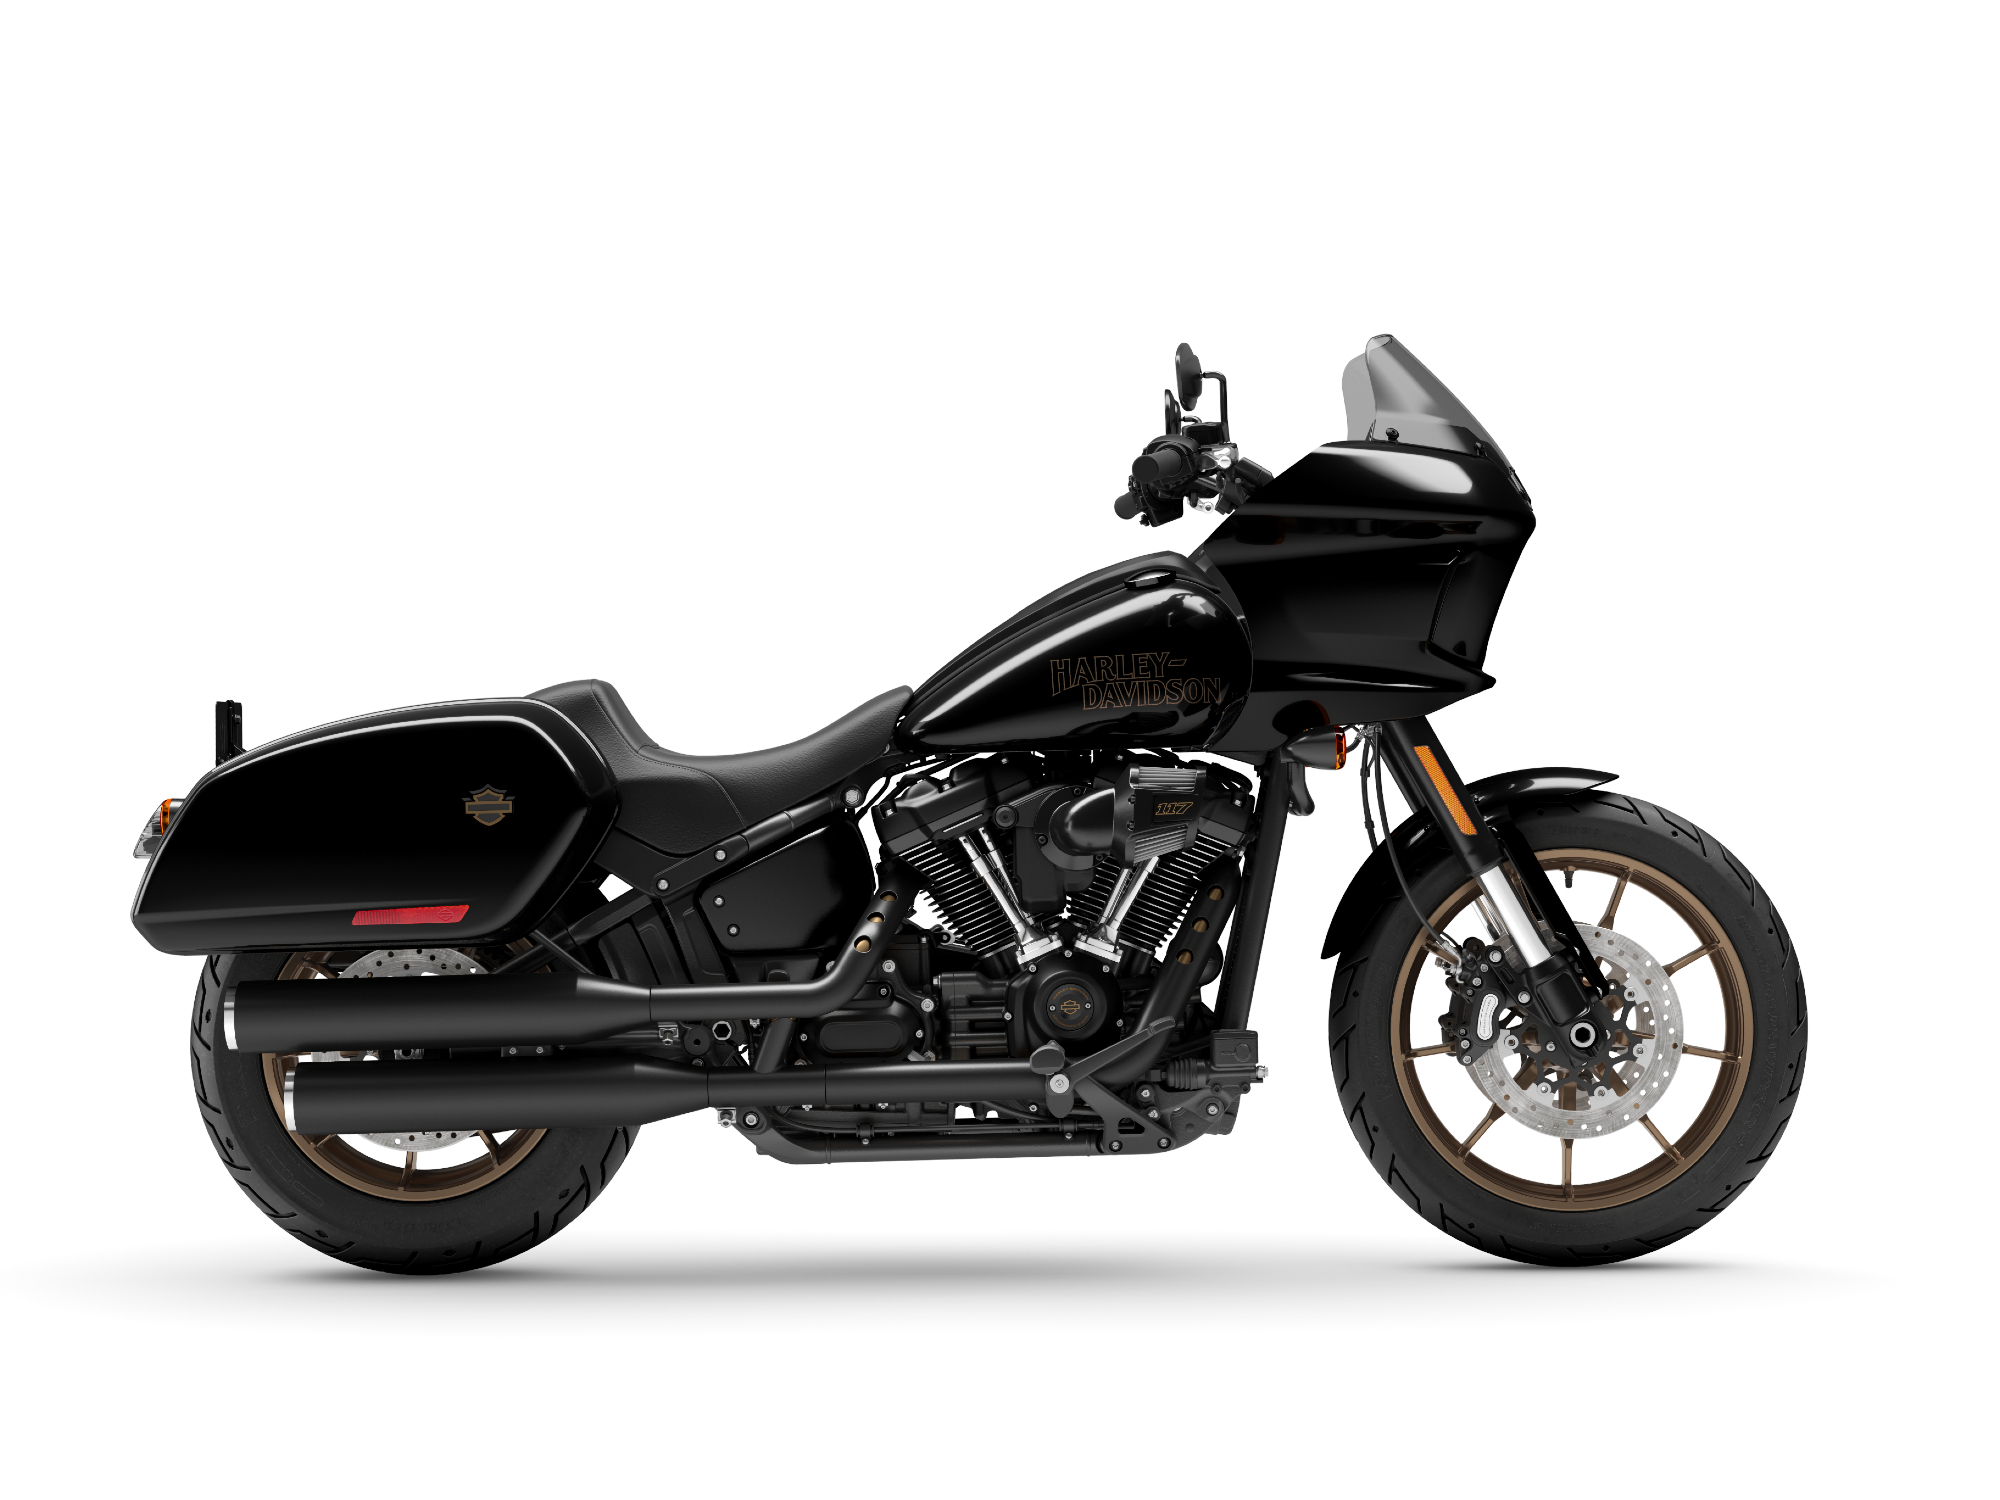 2024 Harley-Davidson Low Rider ST product shot in Vivid Black color.